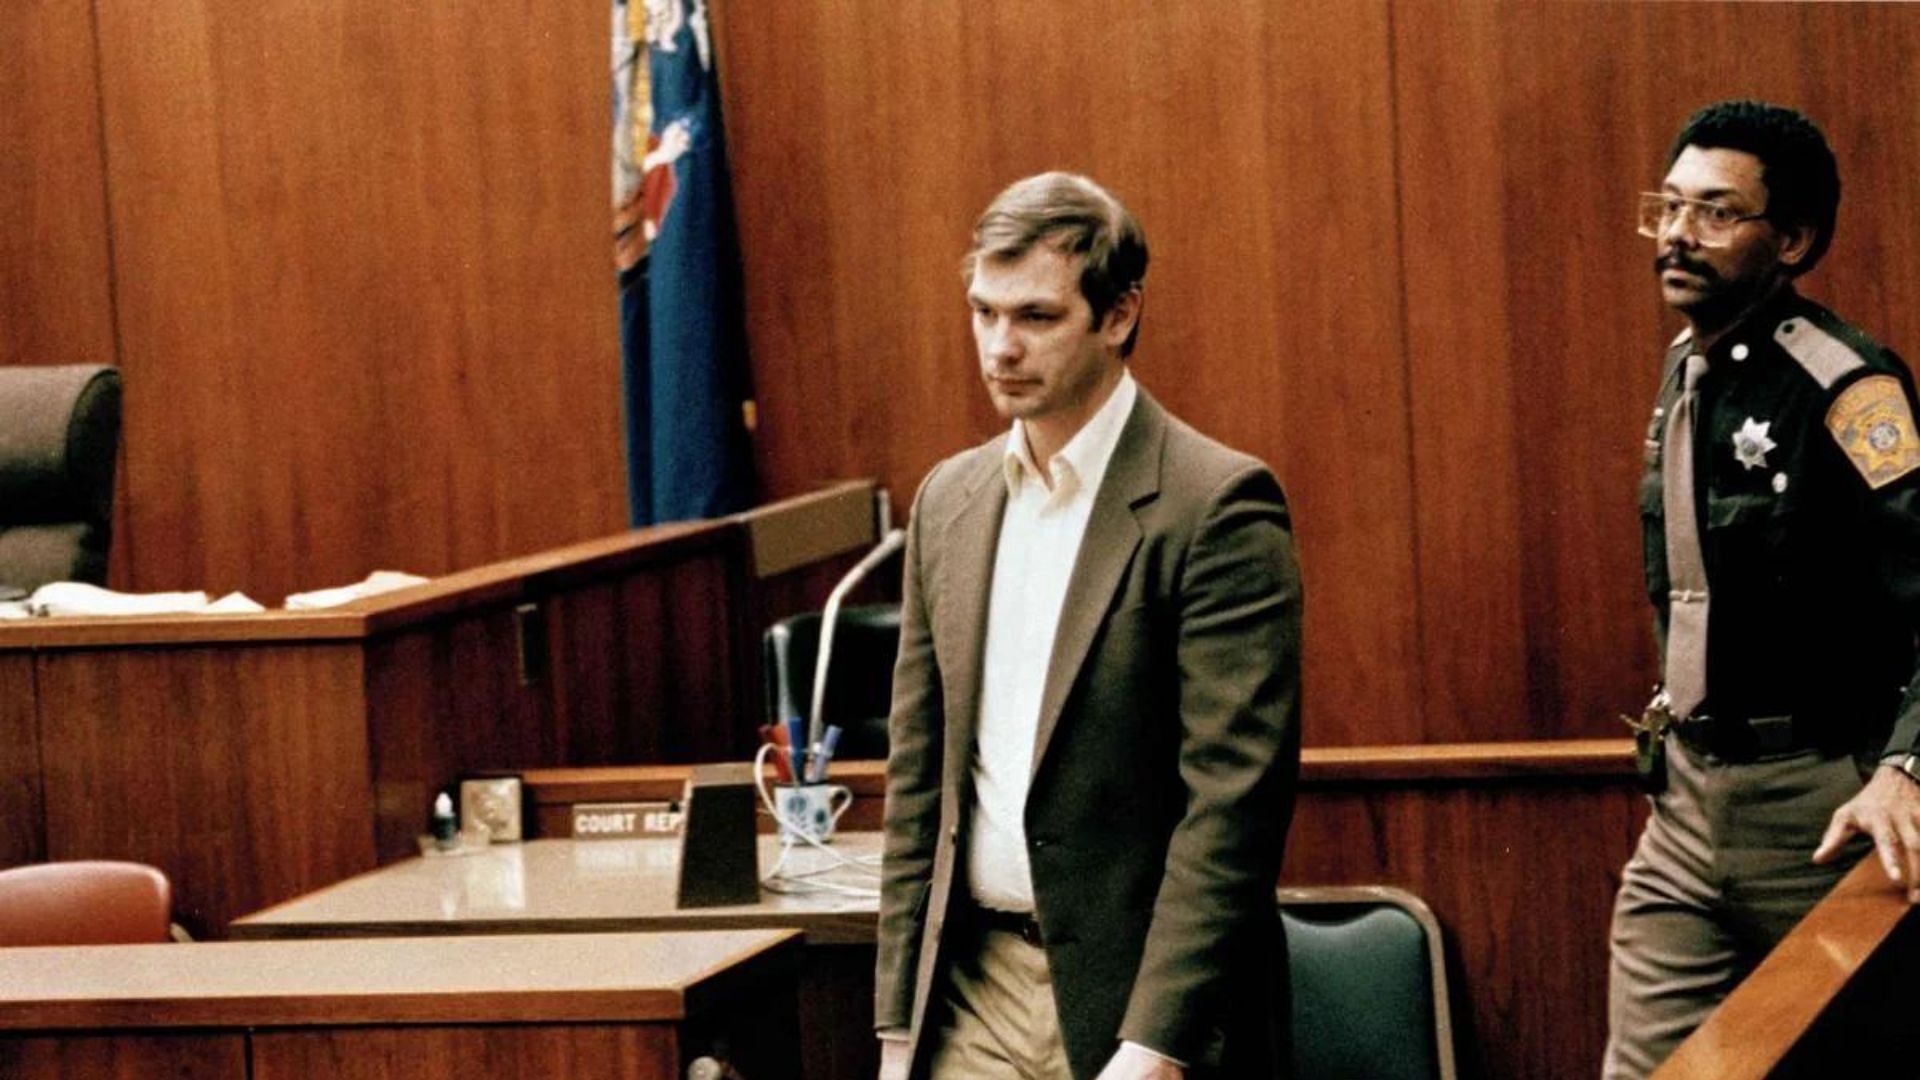 Jeffrey Lionel Dahmer in trial for his crimes (Image via Reddit)